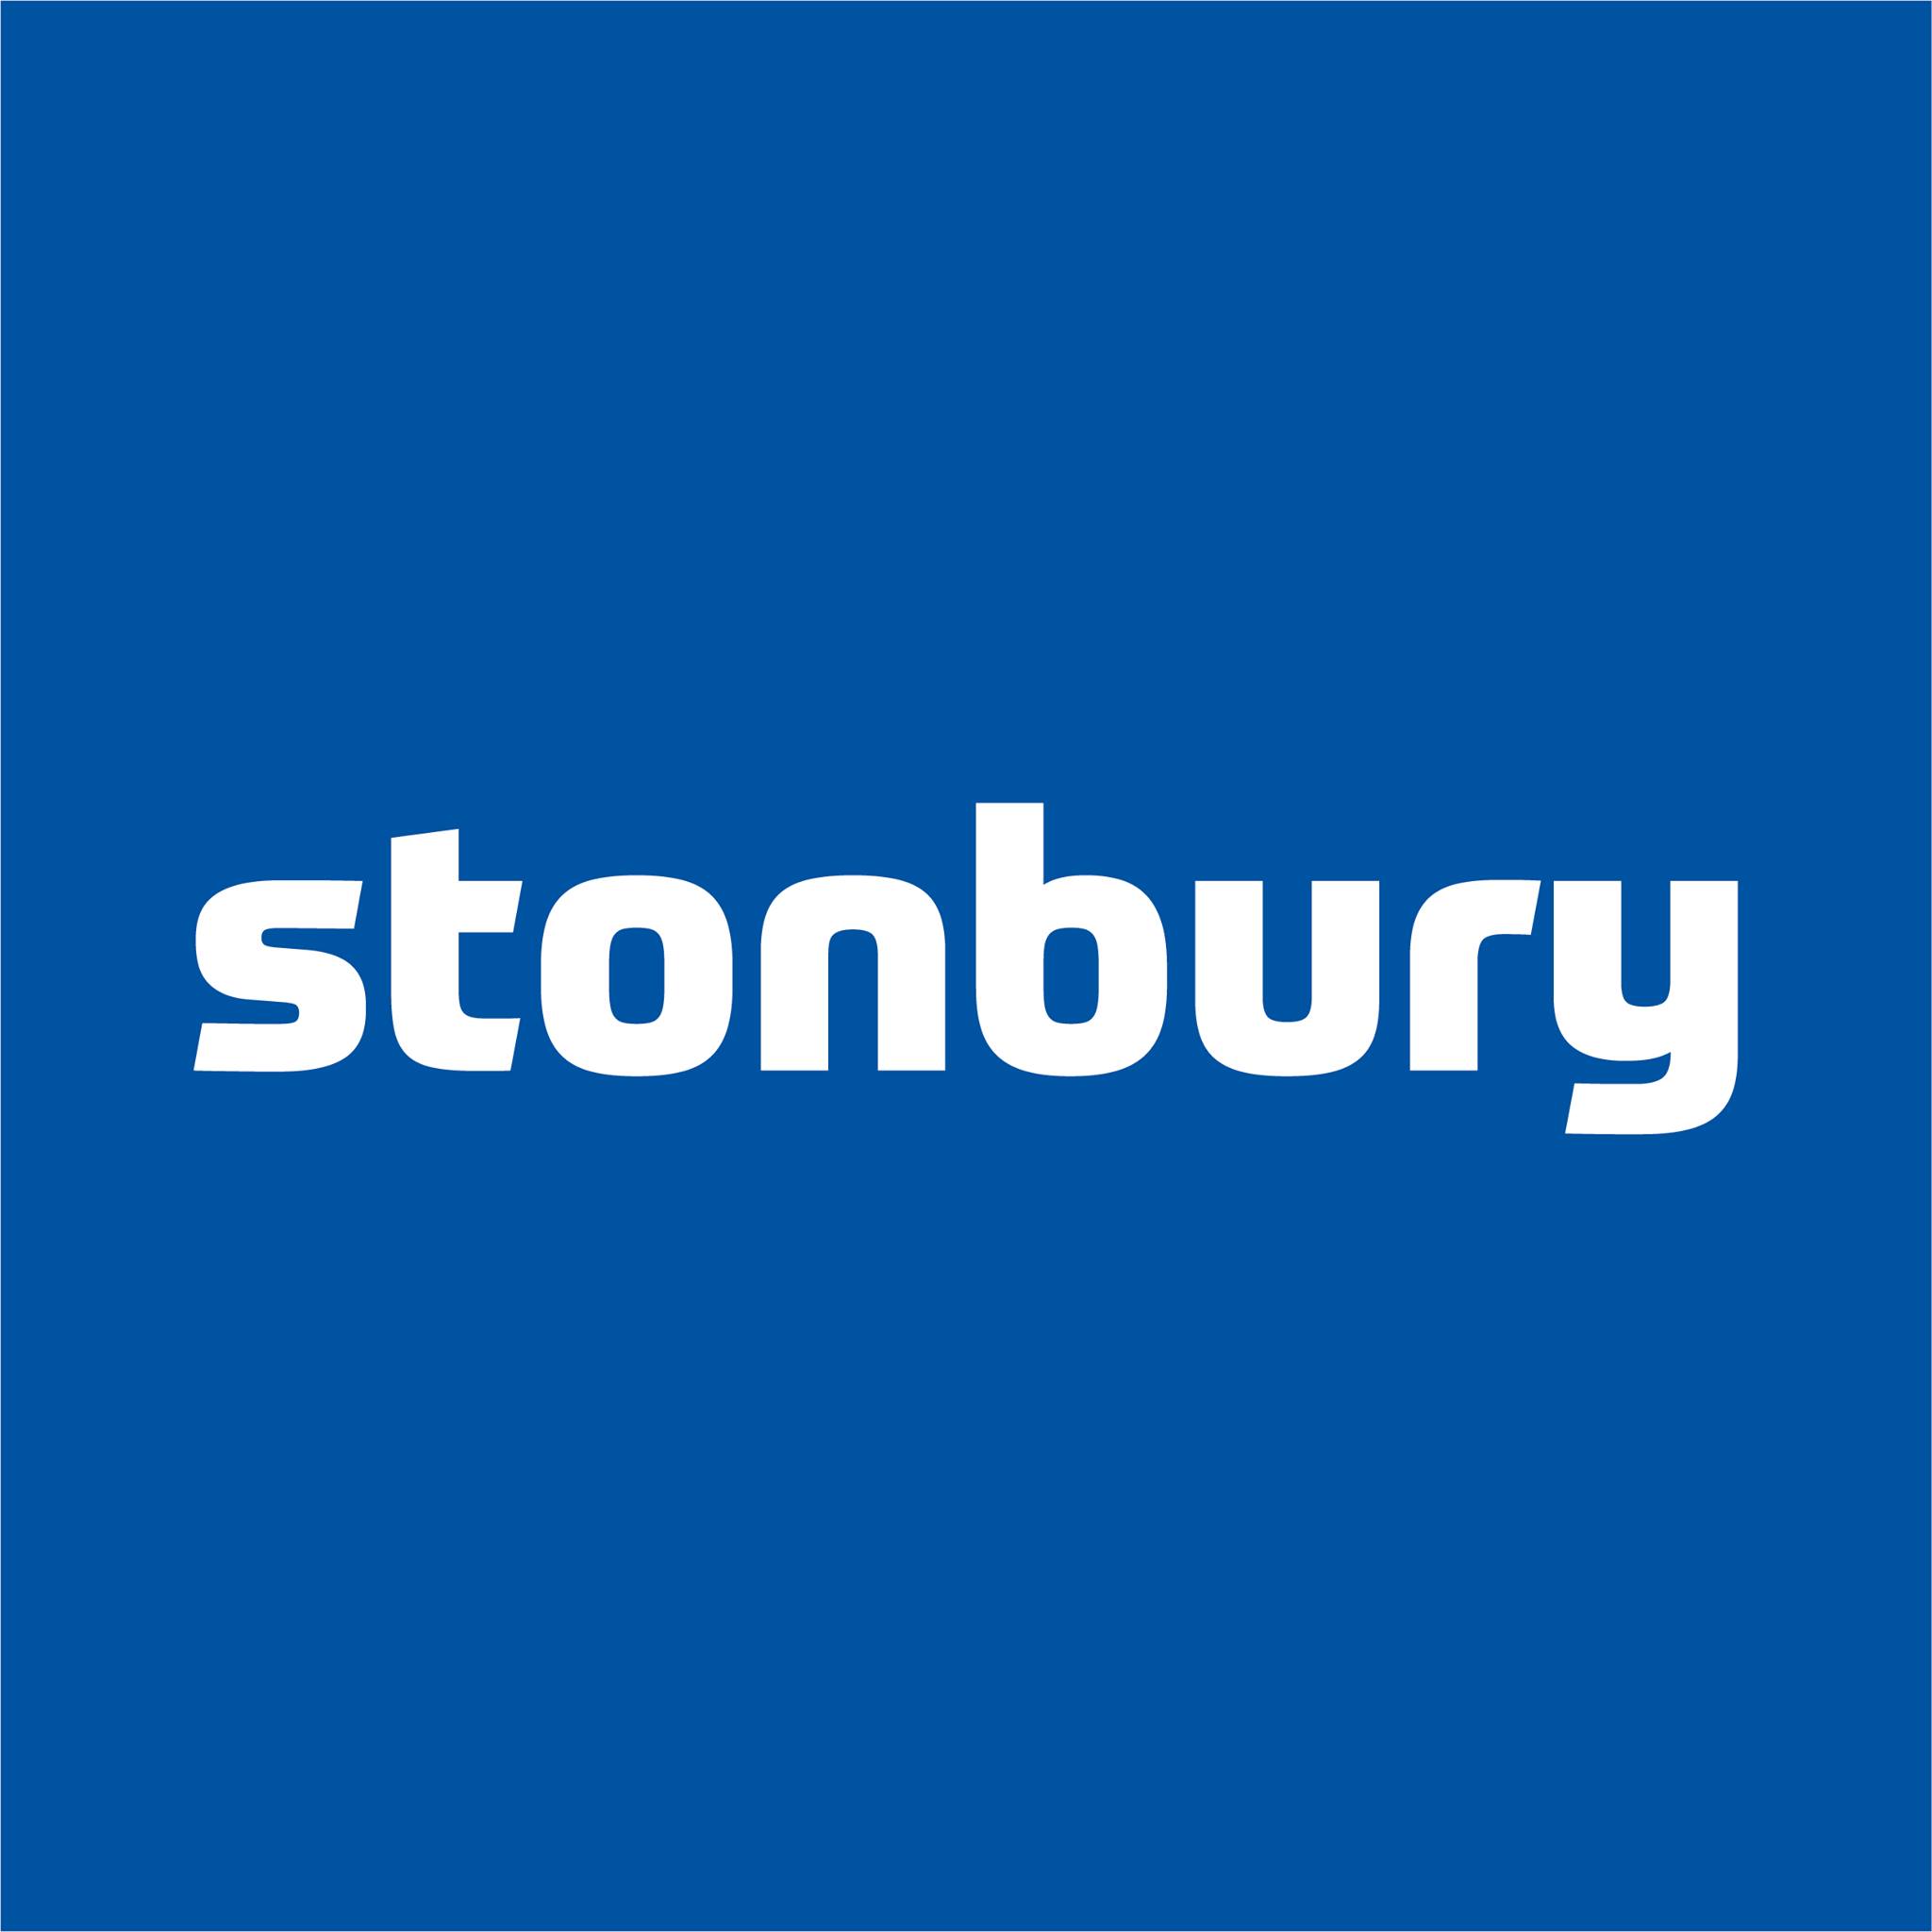 Stonbury - Grounds Maintenance SHEW inspection